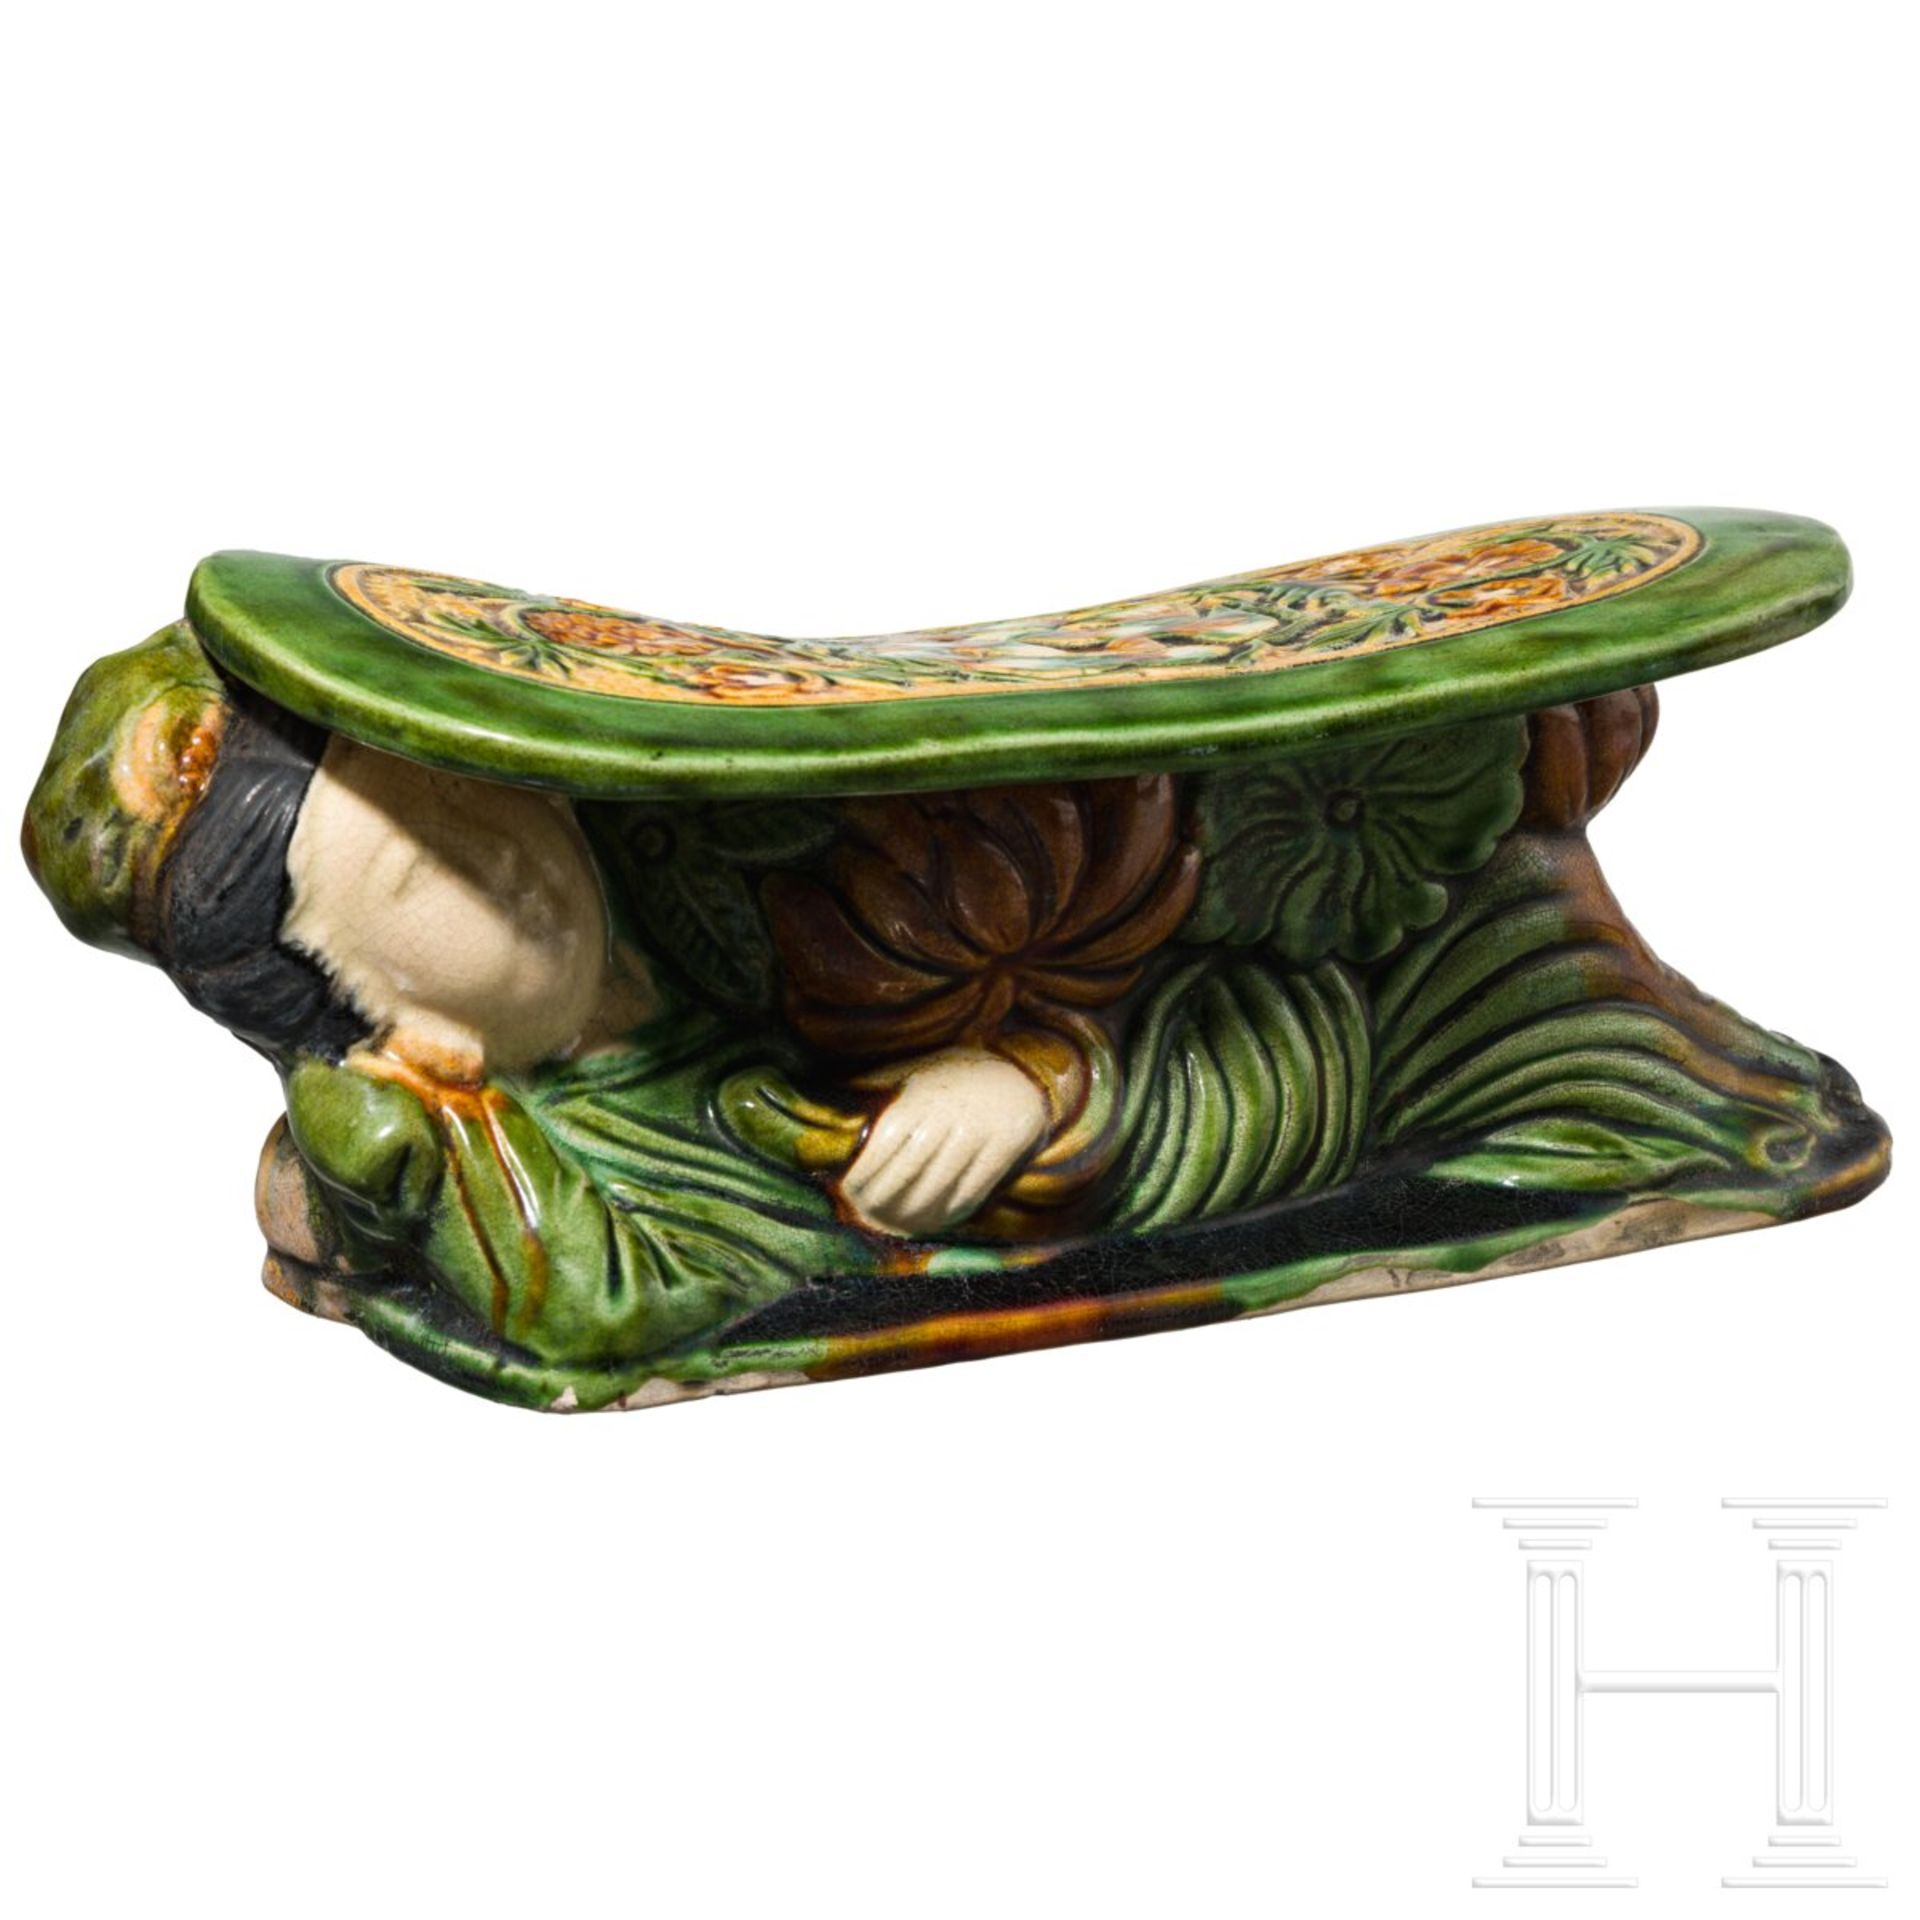 Sancai-glasiertes Keramik-Kissen, China, wohl 19./20. Jhdt. - Image 13 of 14